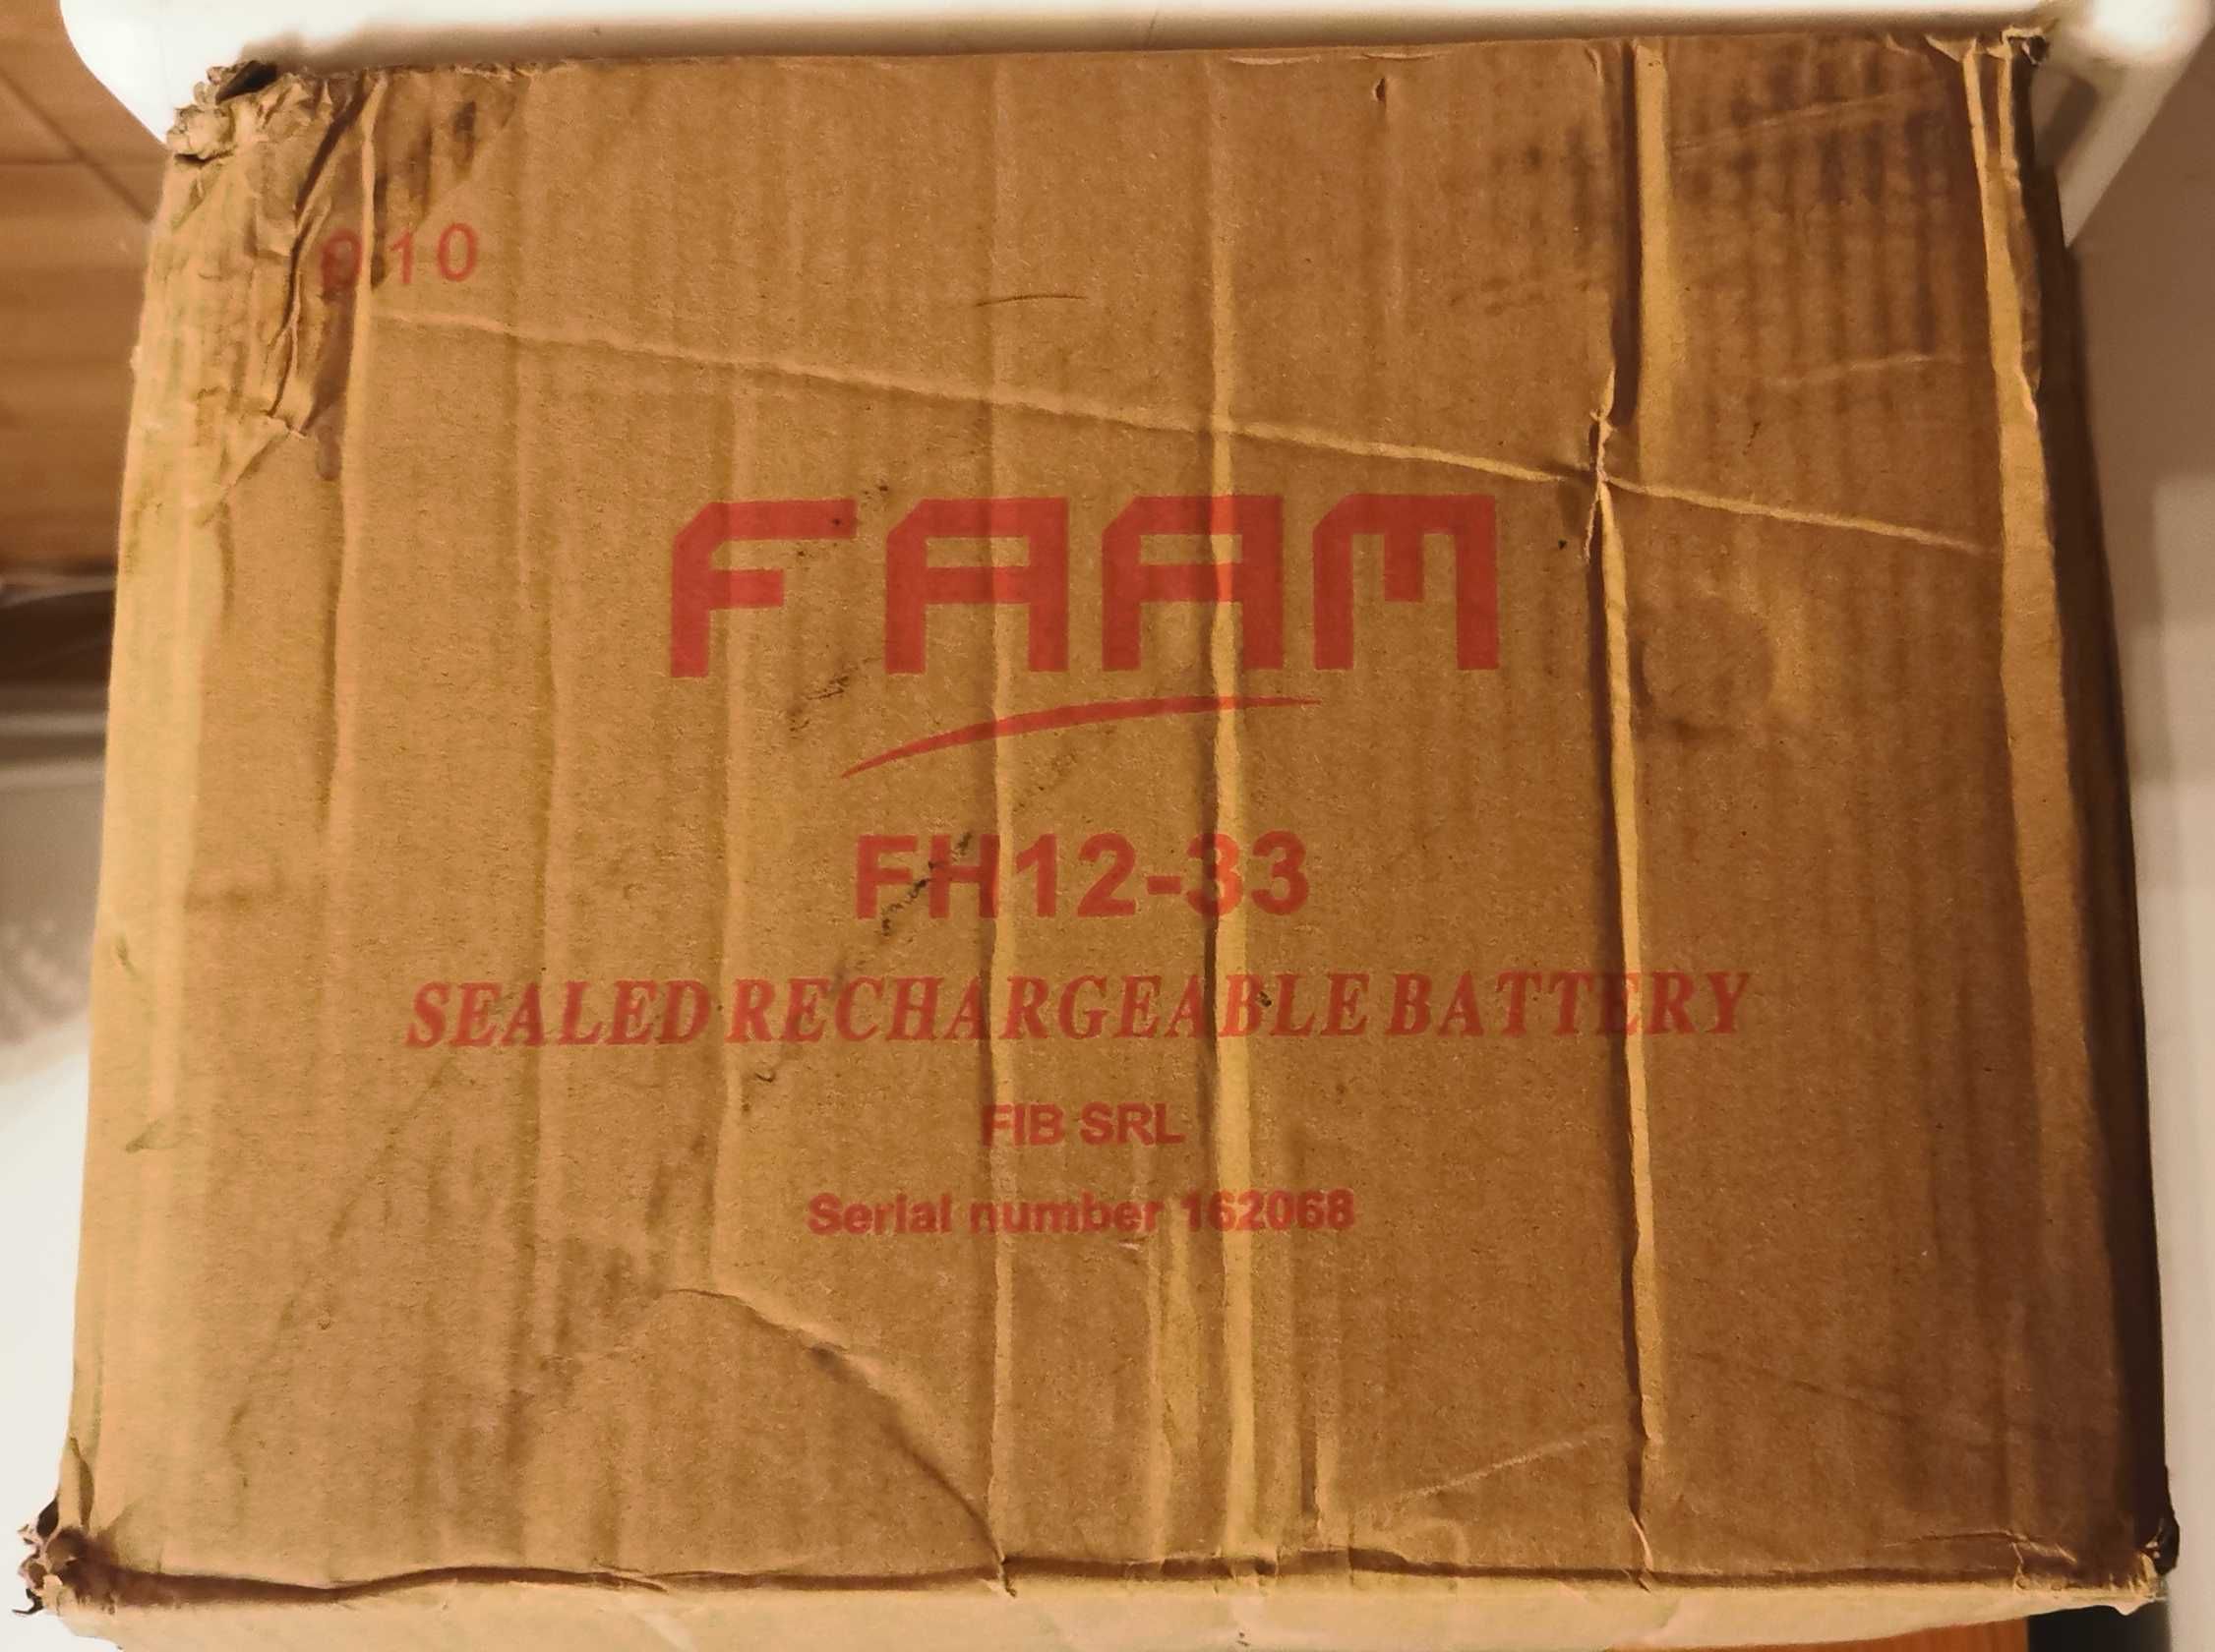 Acumulator FAAM FH 12-33 12V 33Ah (2 BUC)